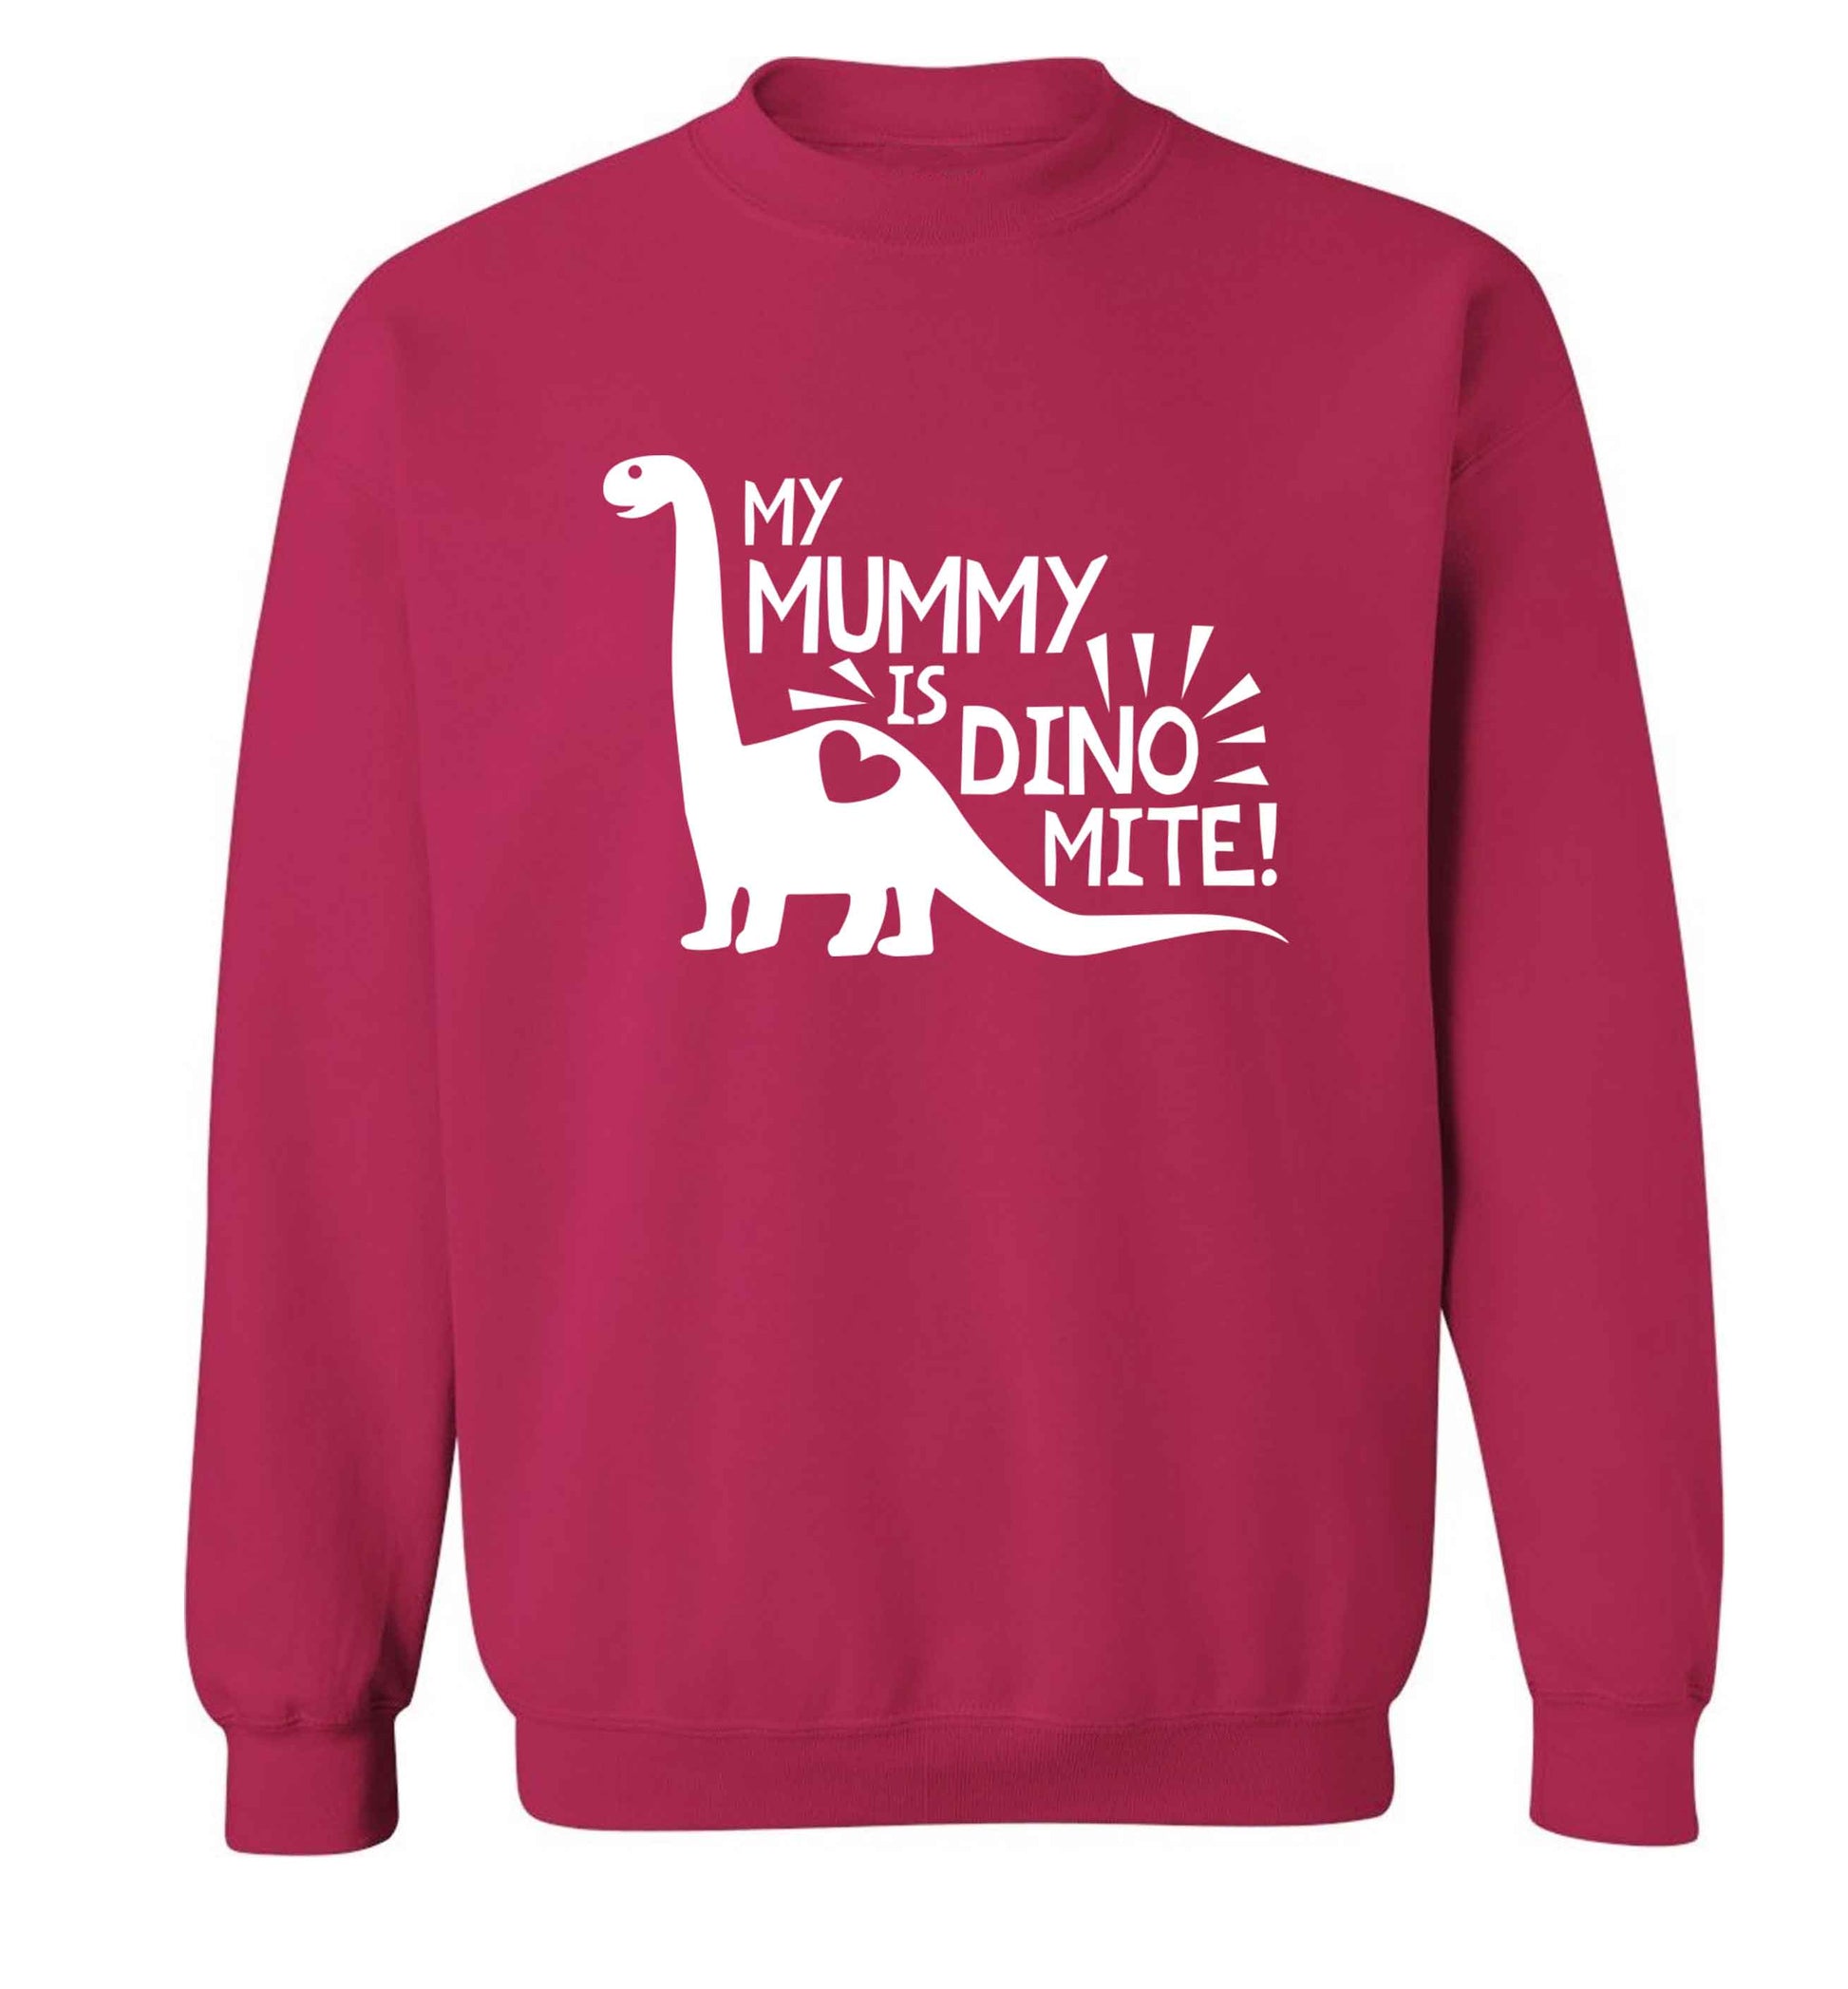 My mummy is dinomite adult's unisex pink sweater 2XL